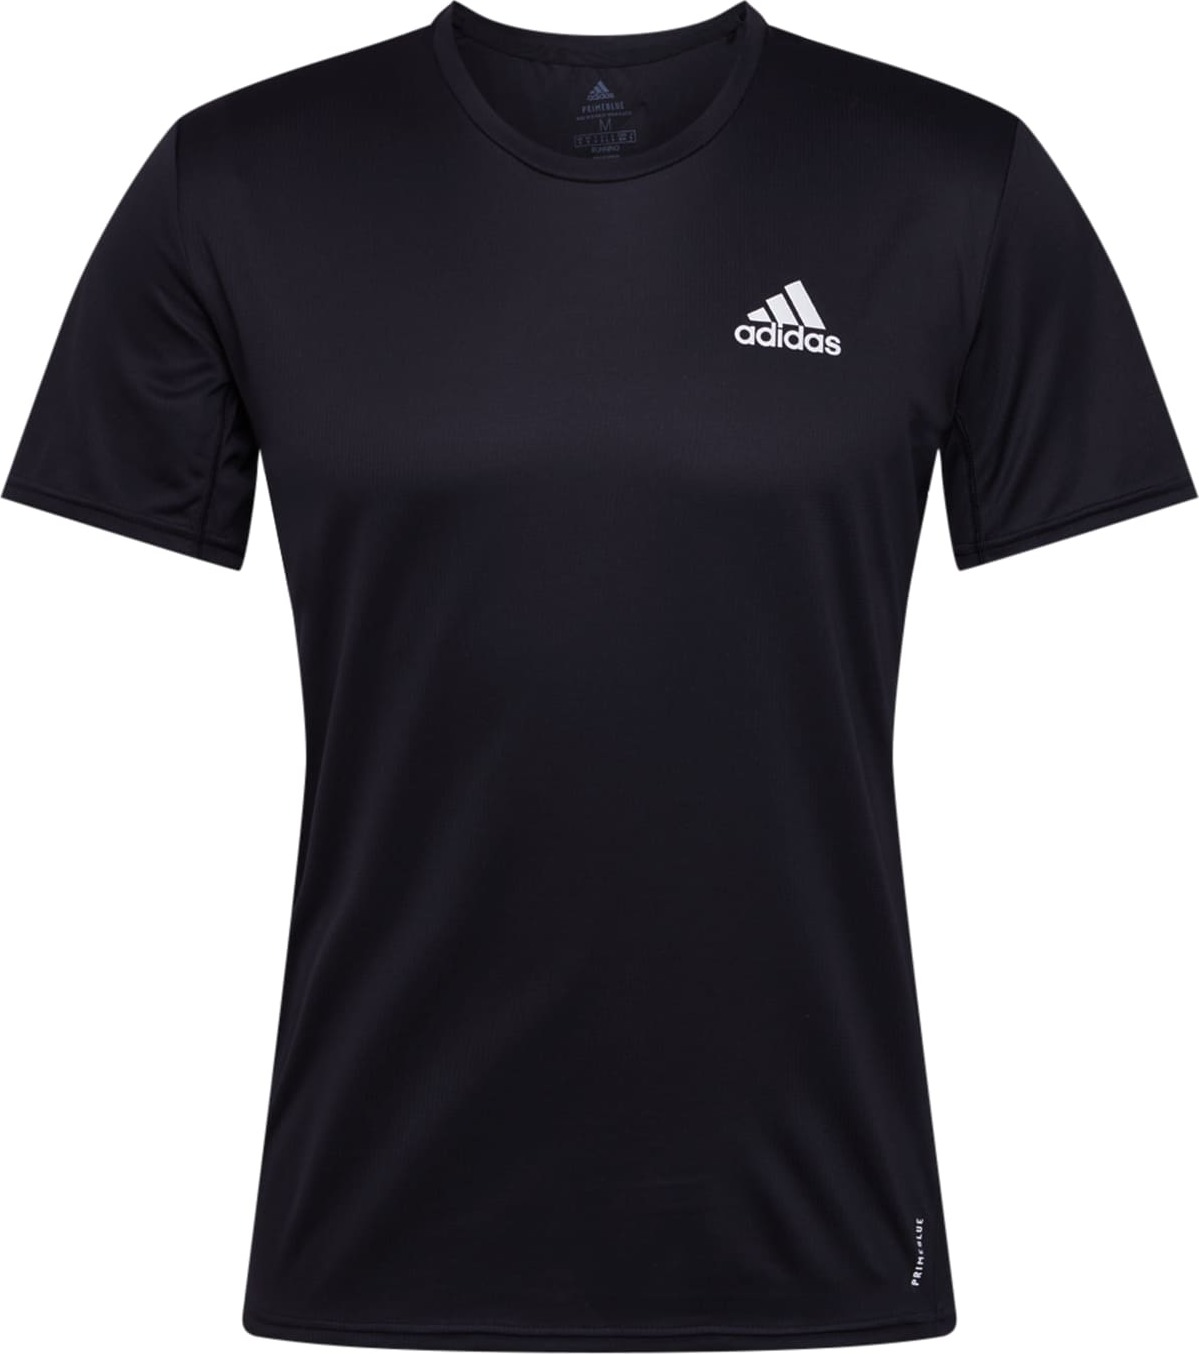 ADIDAS PERFORMANCE Funkční tričko 'Fast Primeblue' černá / bílá